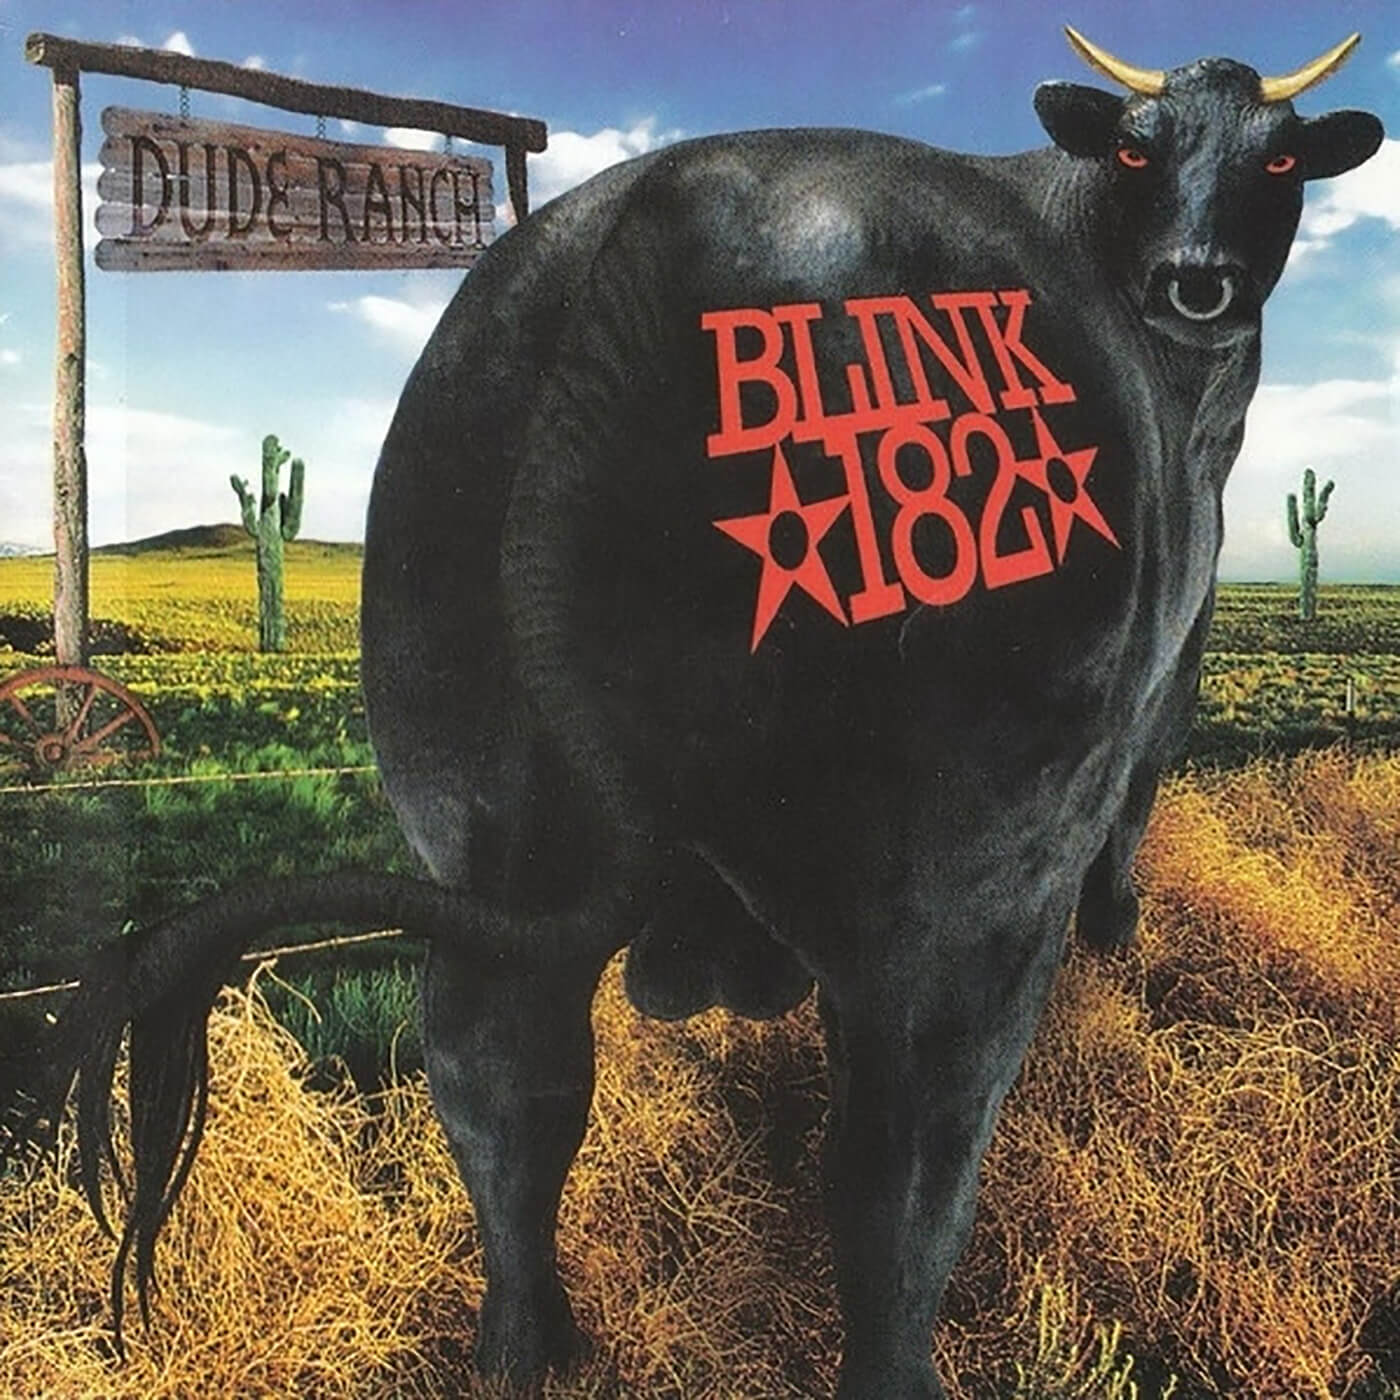 Blink -182 -Dude Ranch